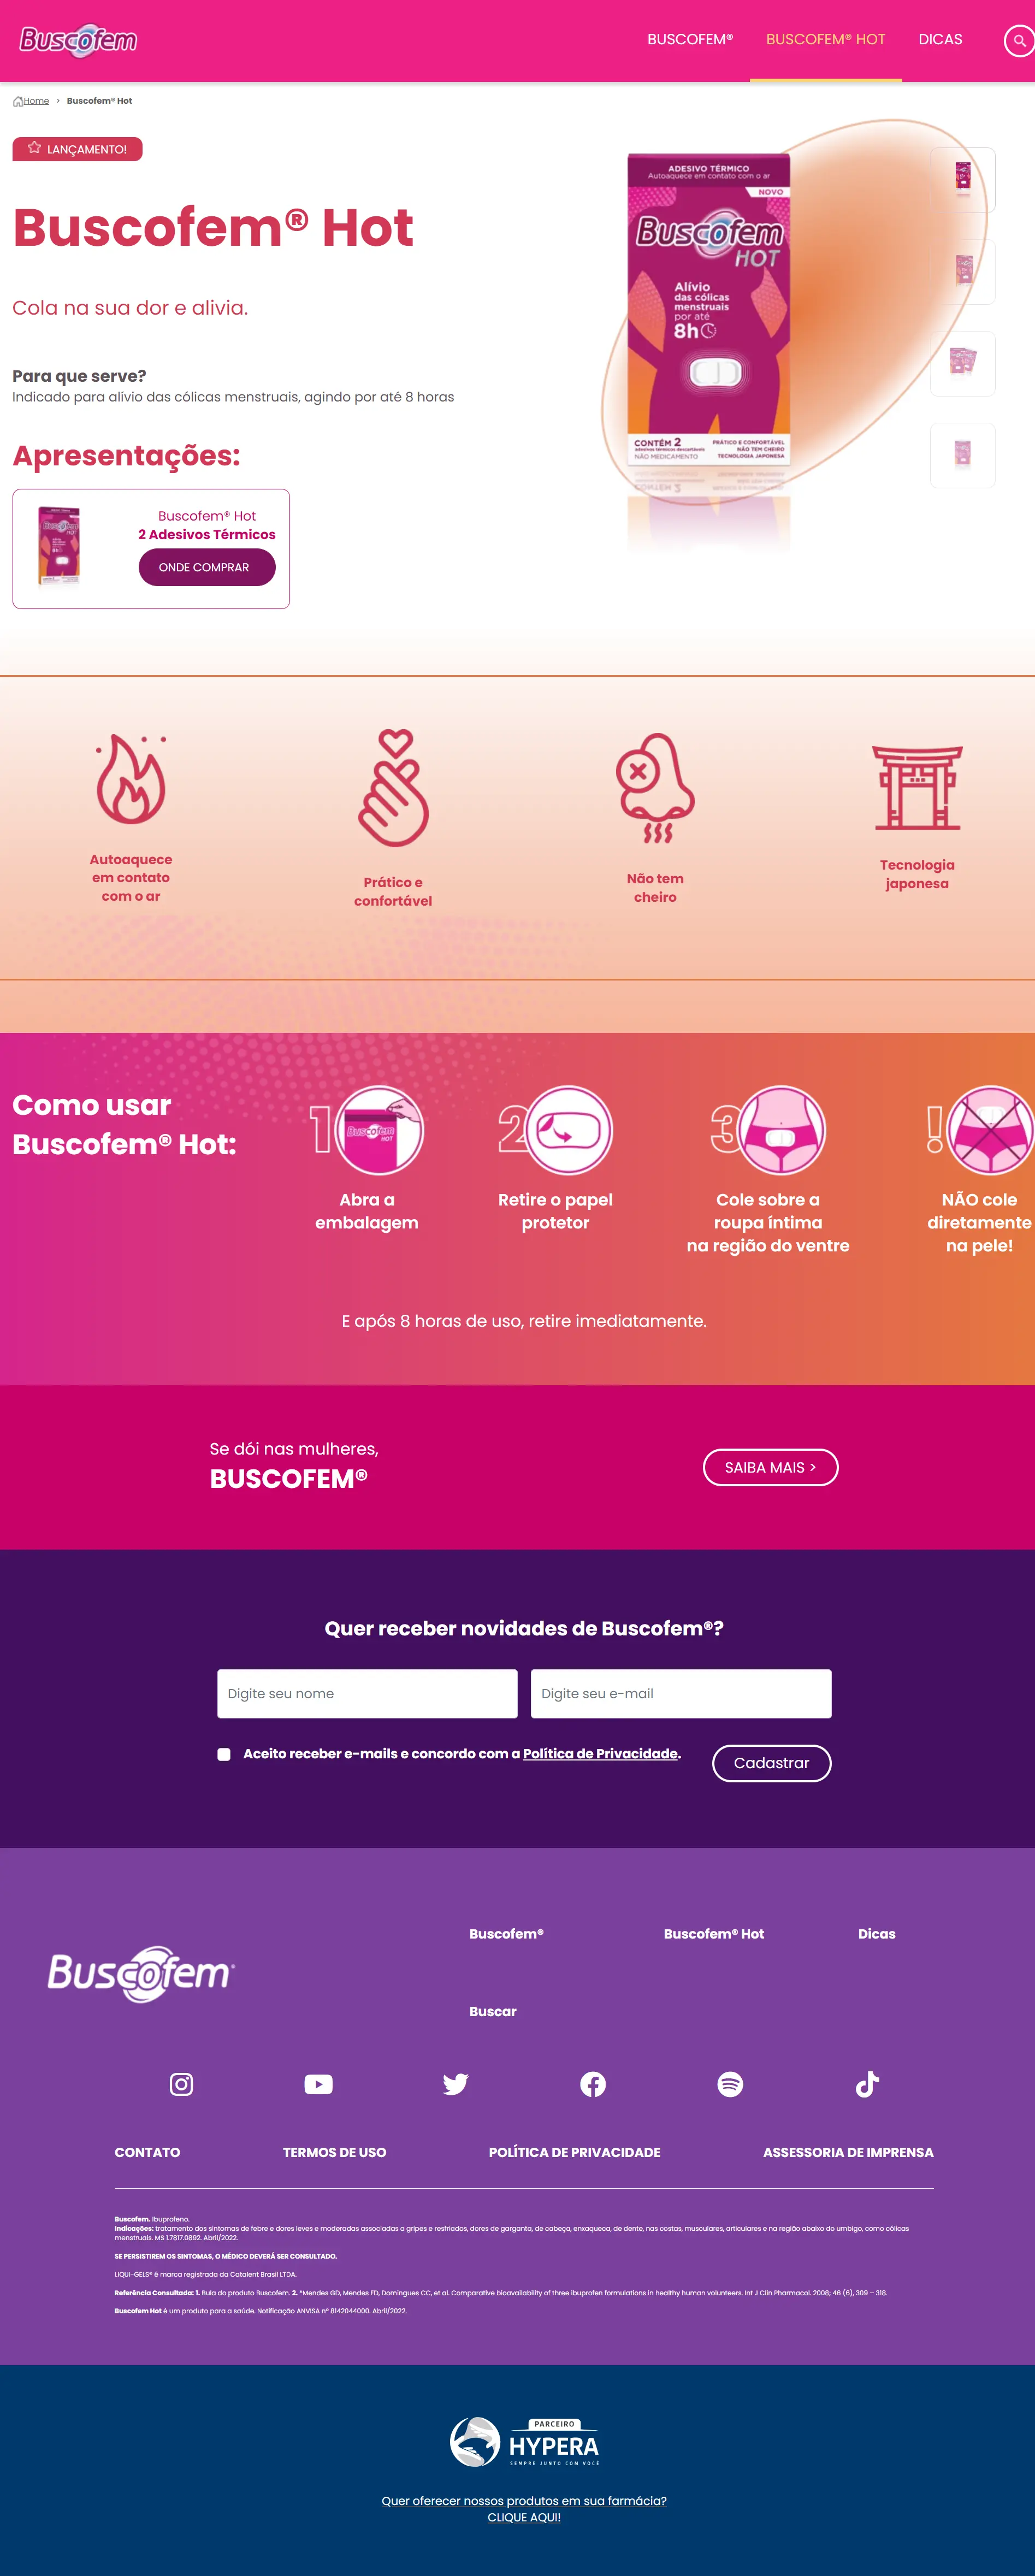 Product page screenshot of Buscofem Hot.